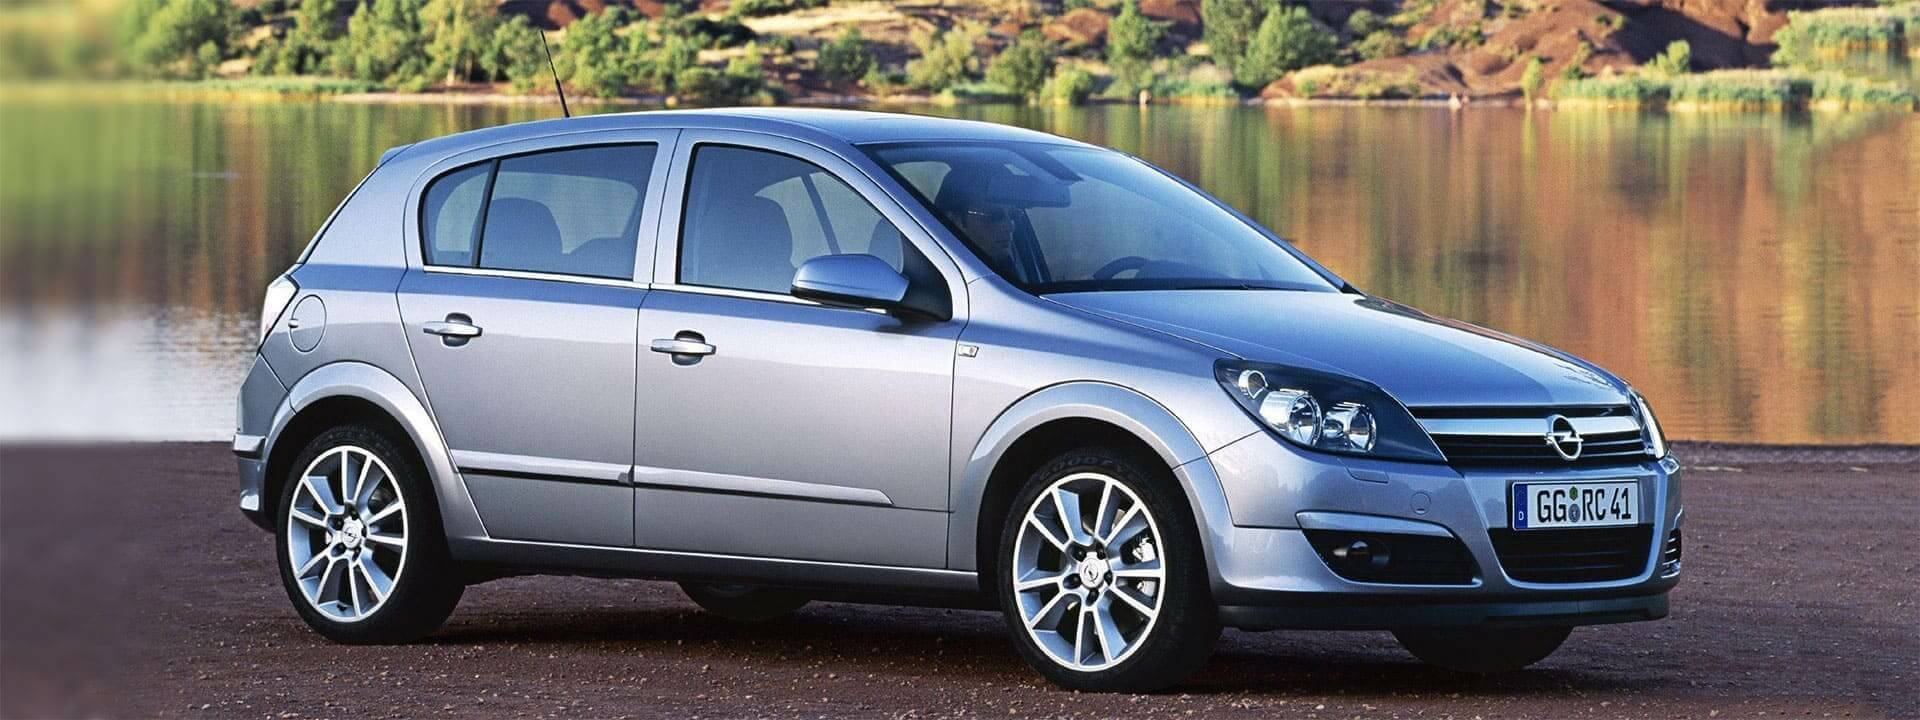 Opel Astra Family хэтчбек